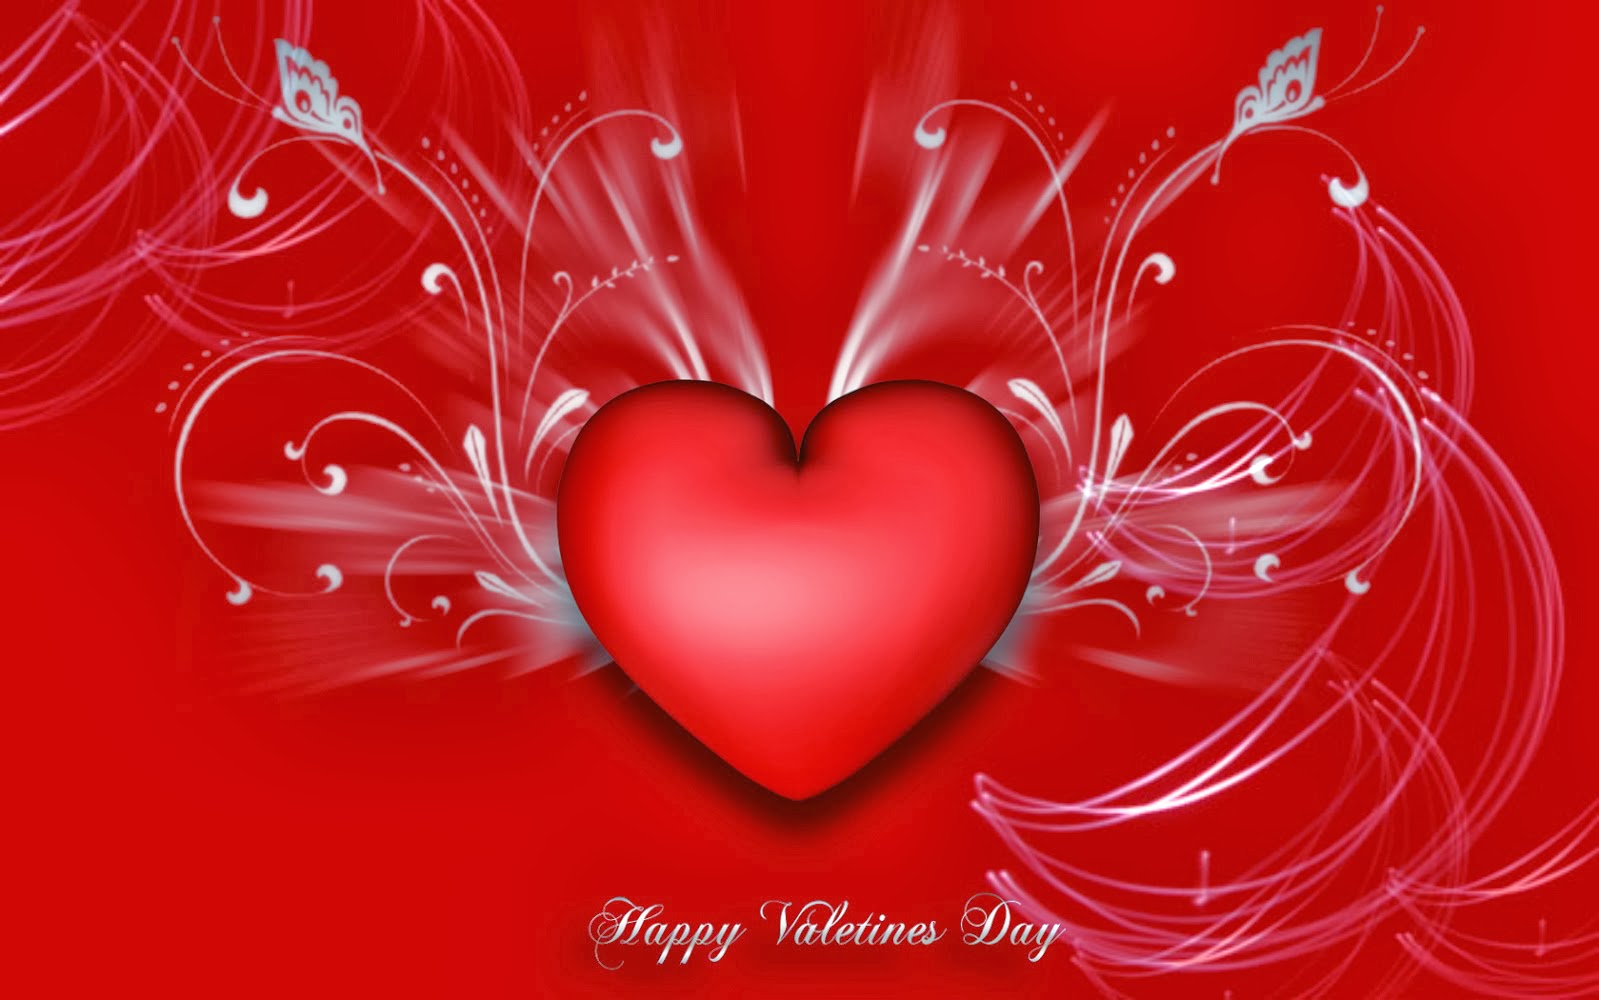 valentine day special wallpaper,heart,red,valentine's day,love,organ